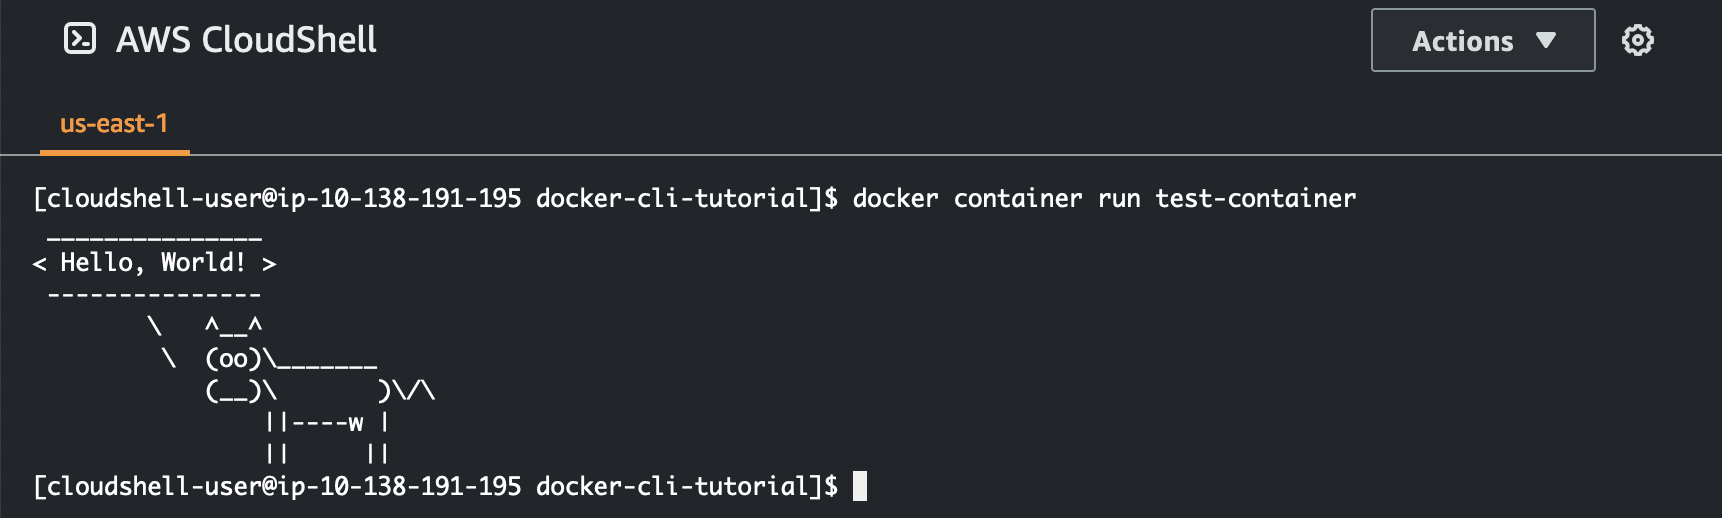 Gambar perintah docker container run di dalamnya AWS CloudShell